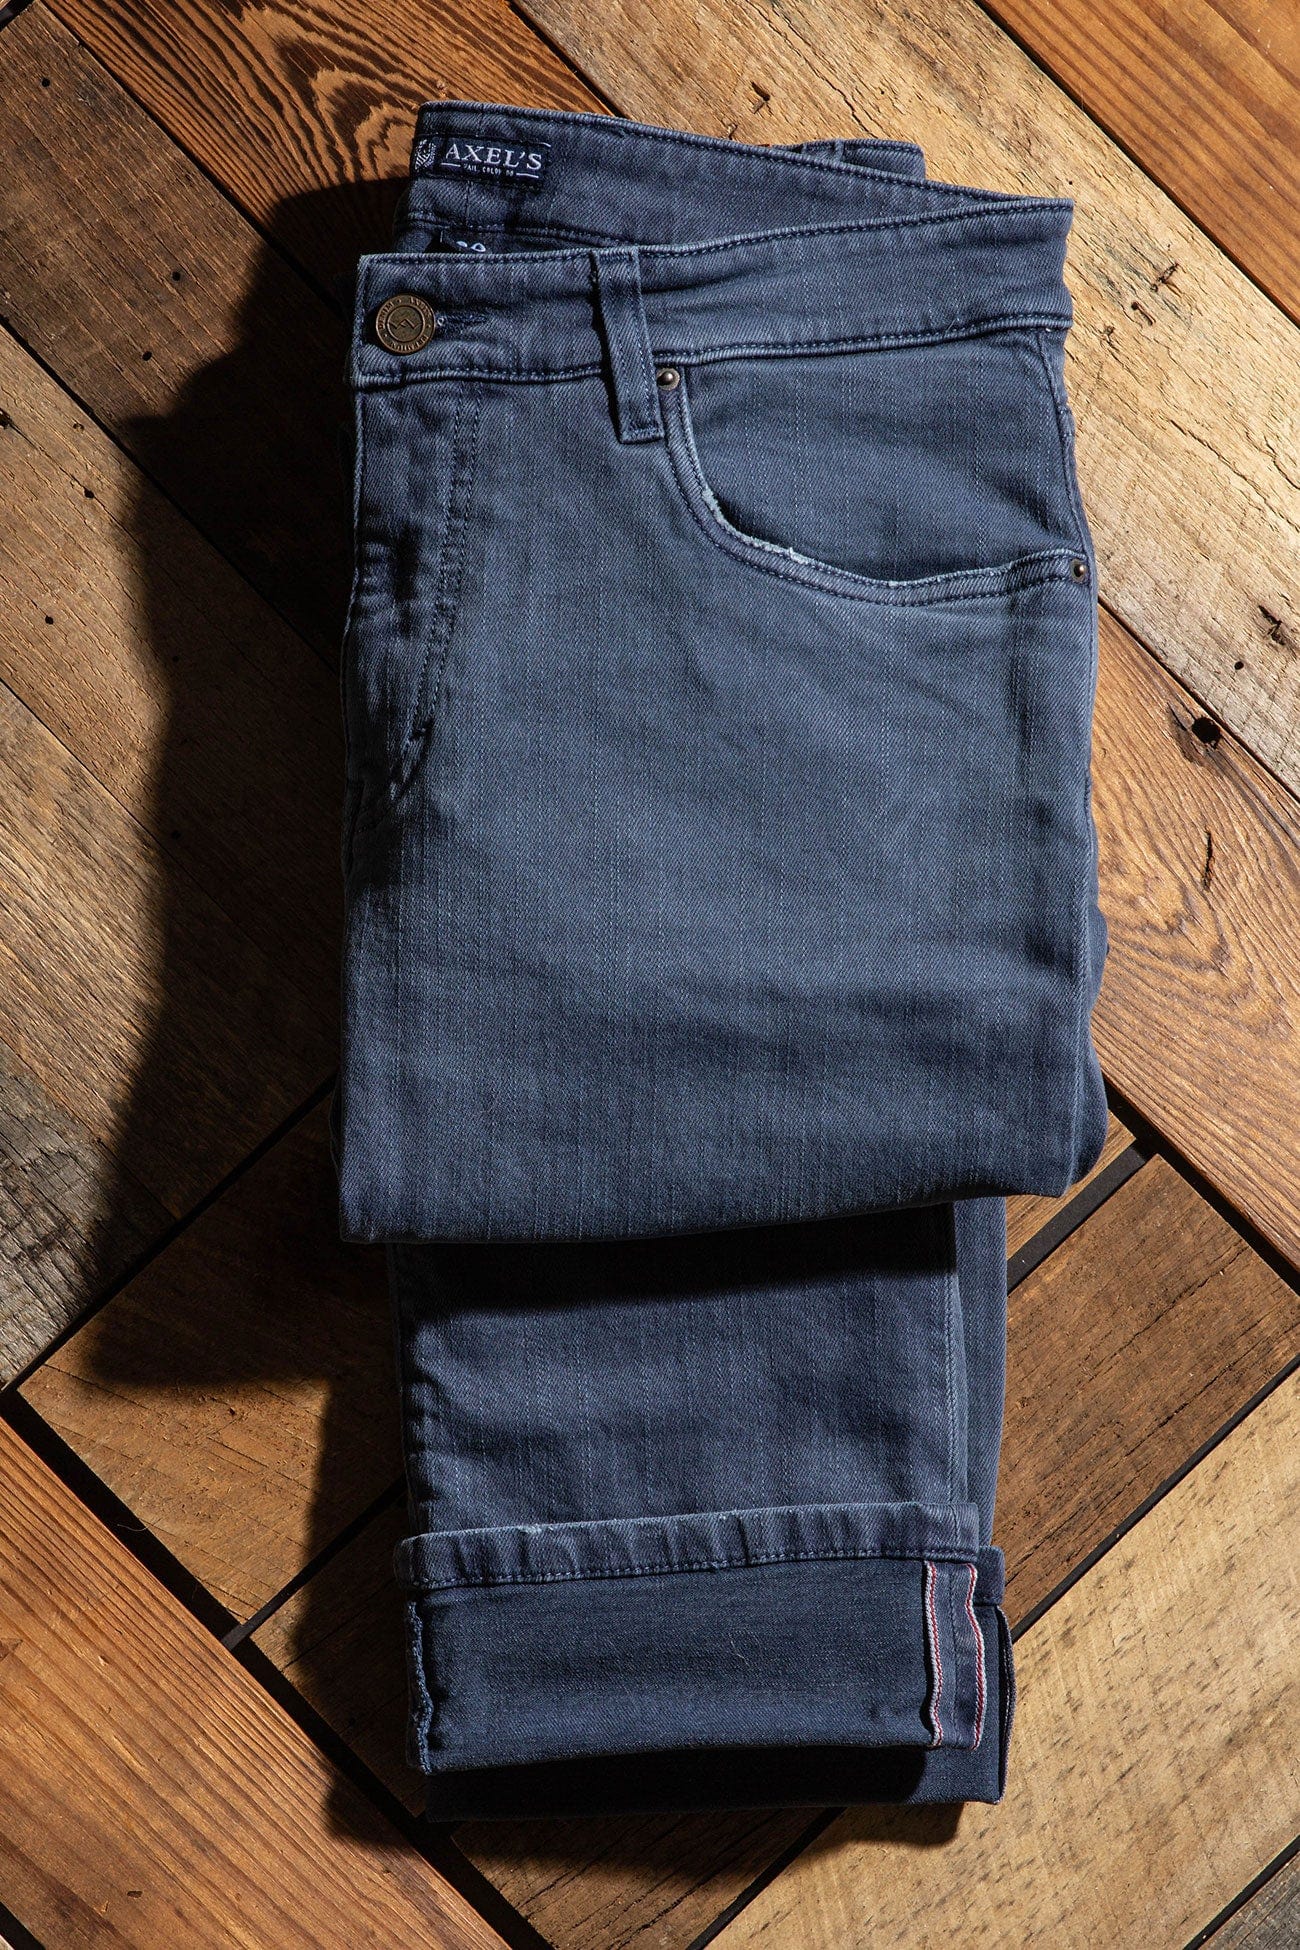 Axels Premium Denim Tucson Selvedge Denim In Indaco Mens - Pants - 5 Pocket